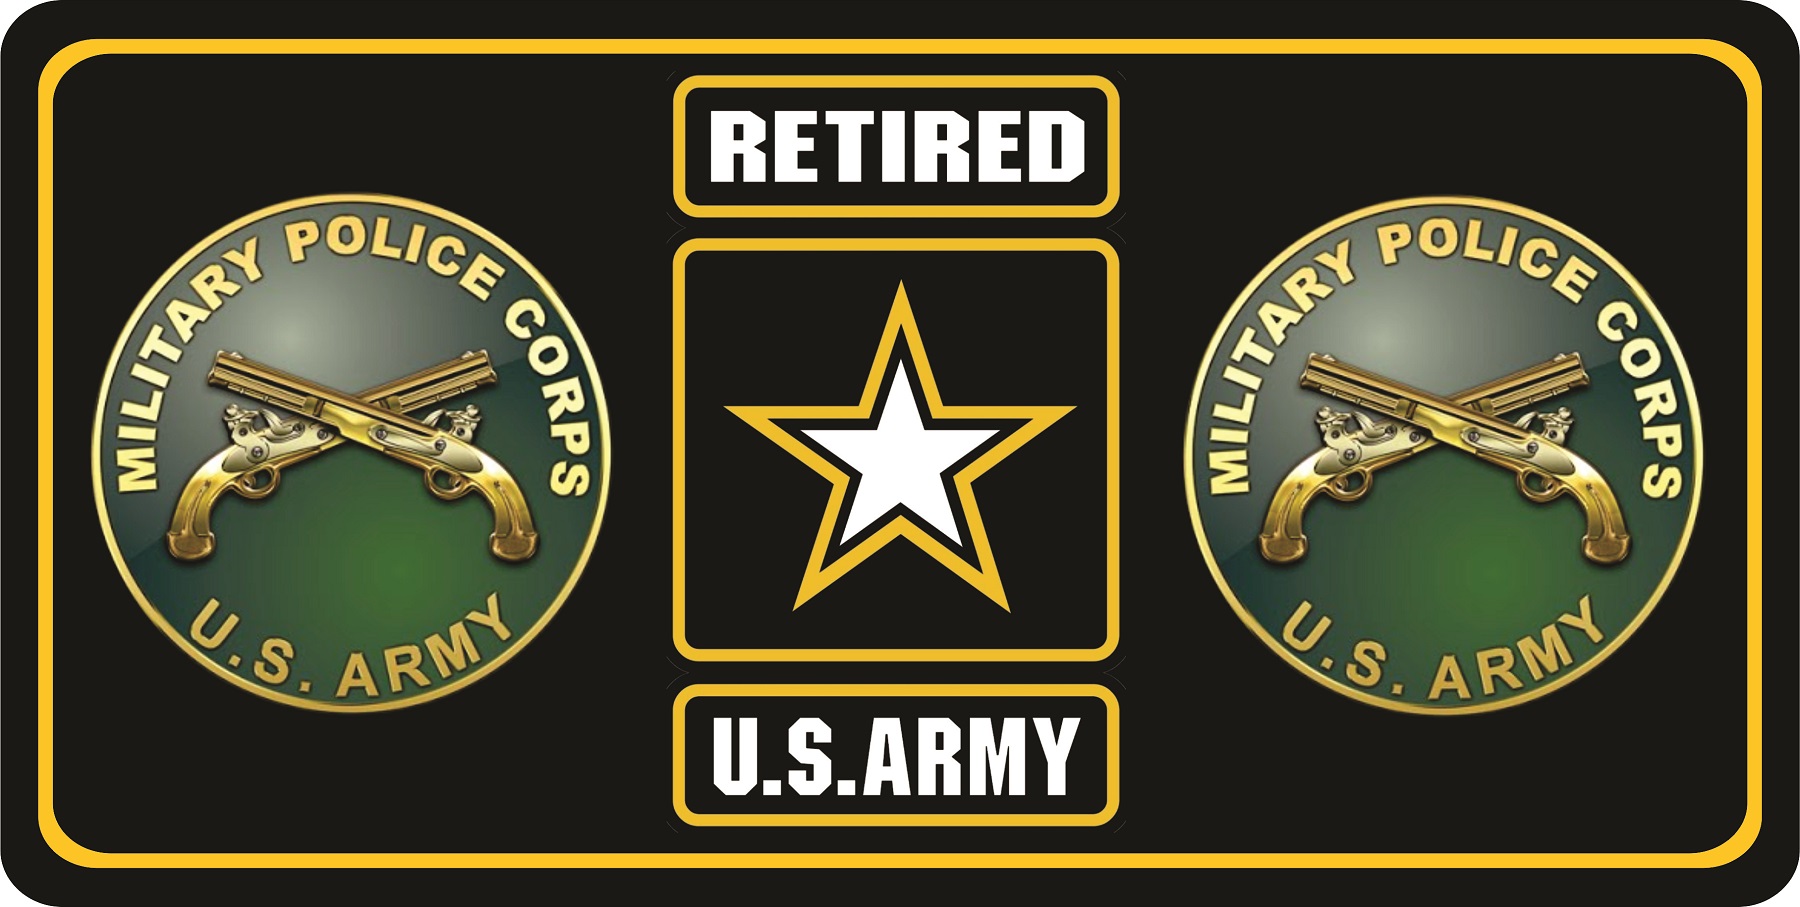 U.S. Army Retired Military Police Photo LICENSE PLATE